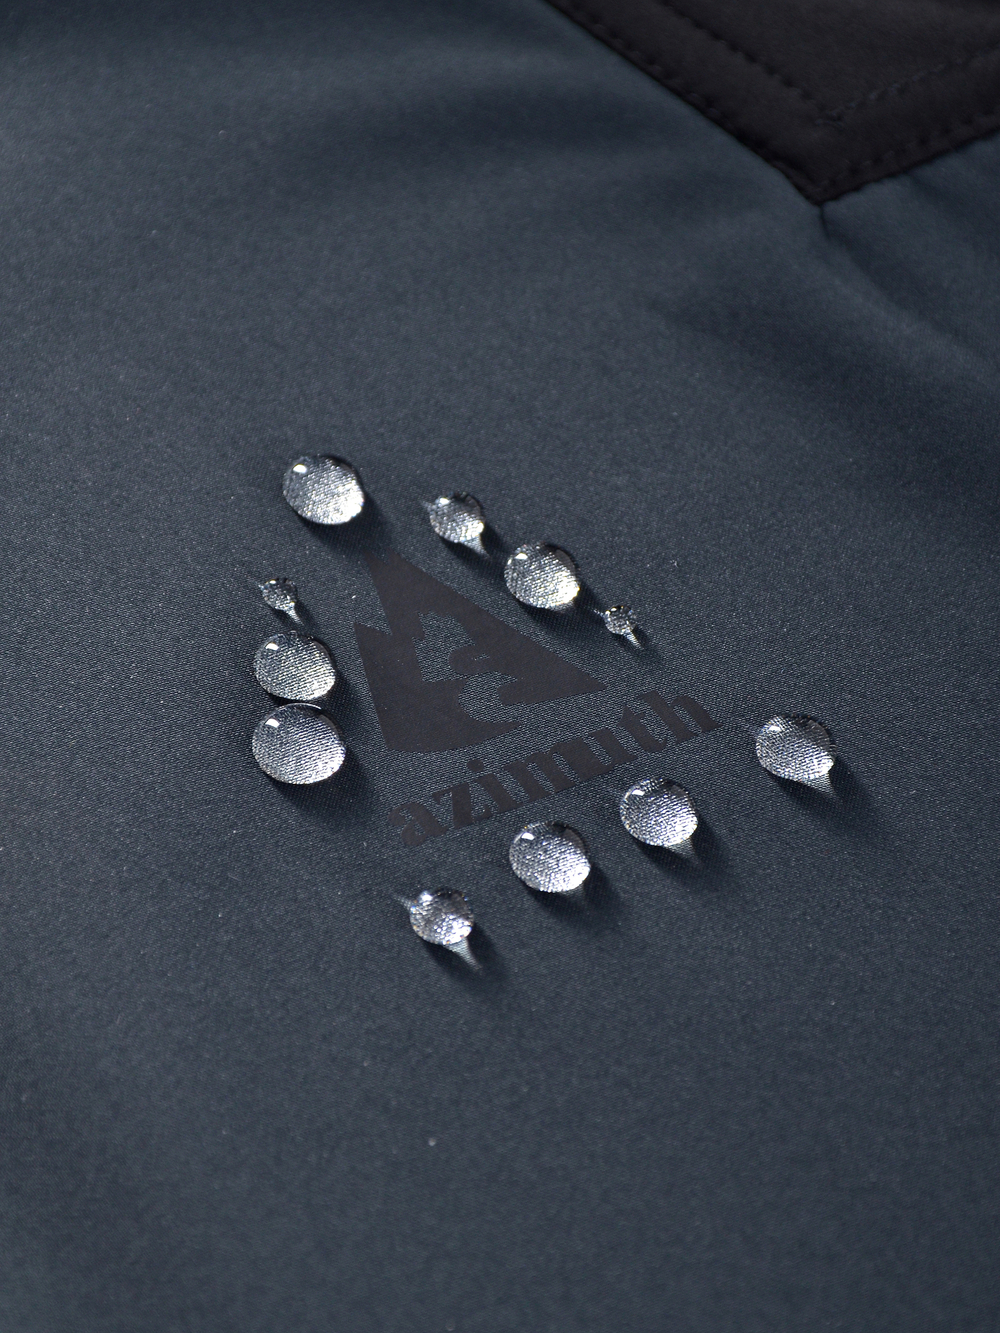 Мужская куртка-виндстоппер софтшелл на флисе БР 221/21870-1_201 Темно-синий